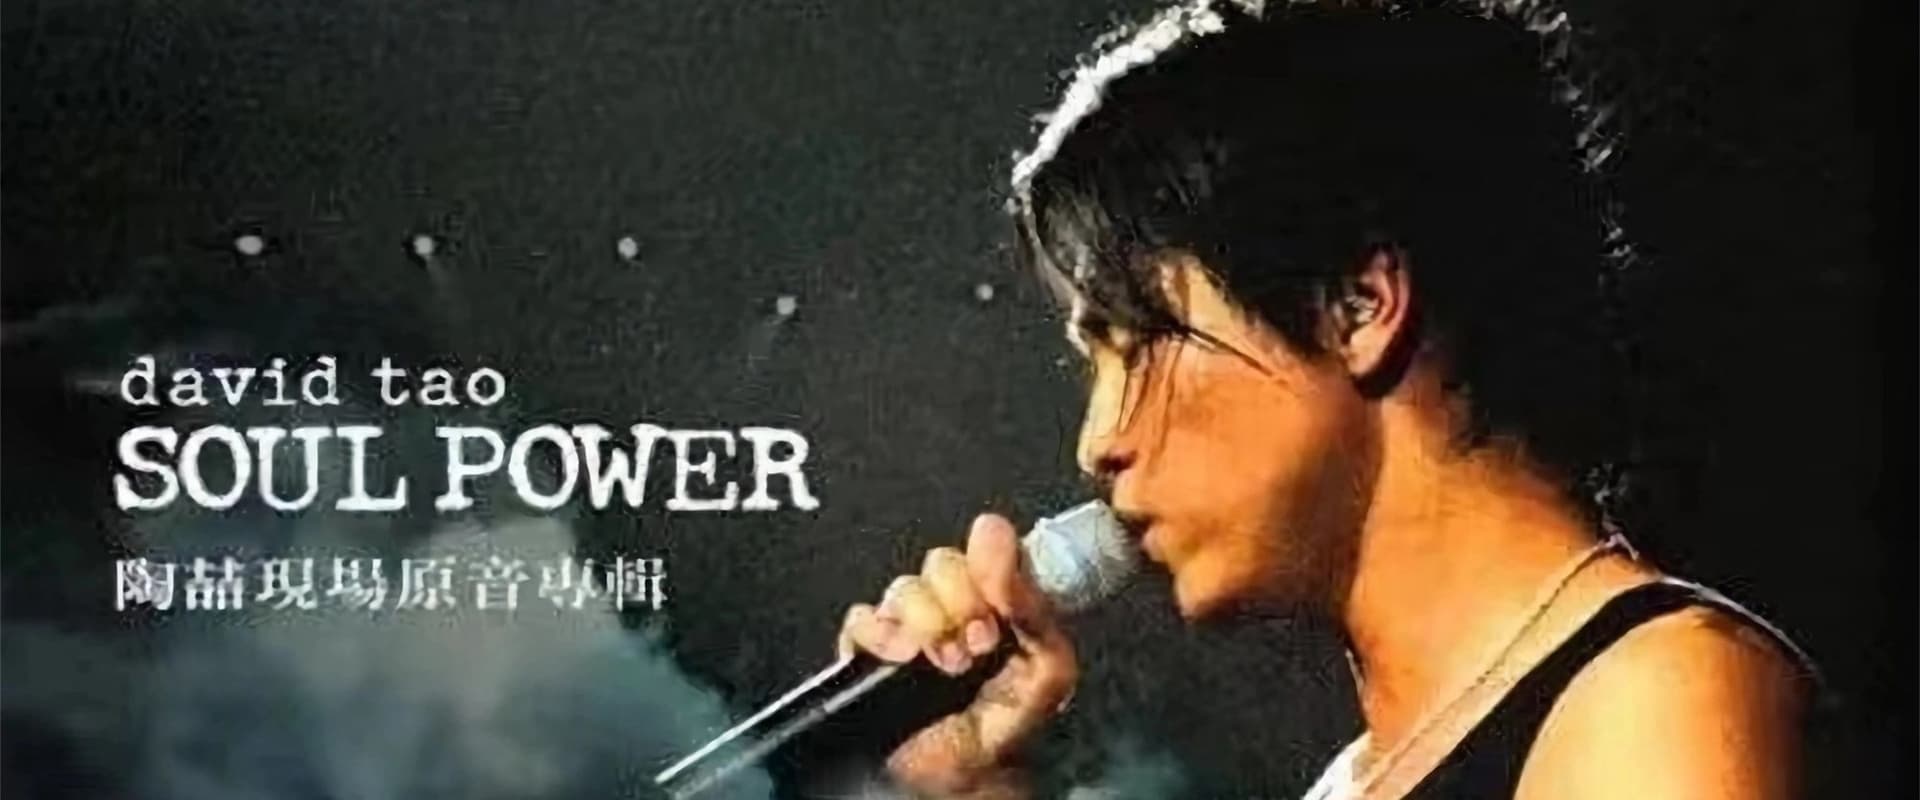 David Tao 2003 HK Soul Power Concert